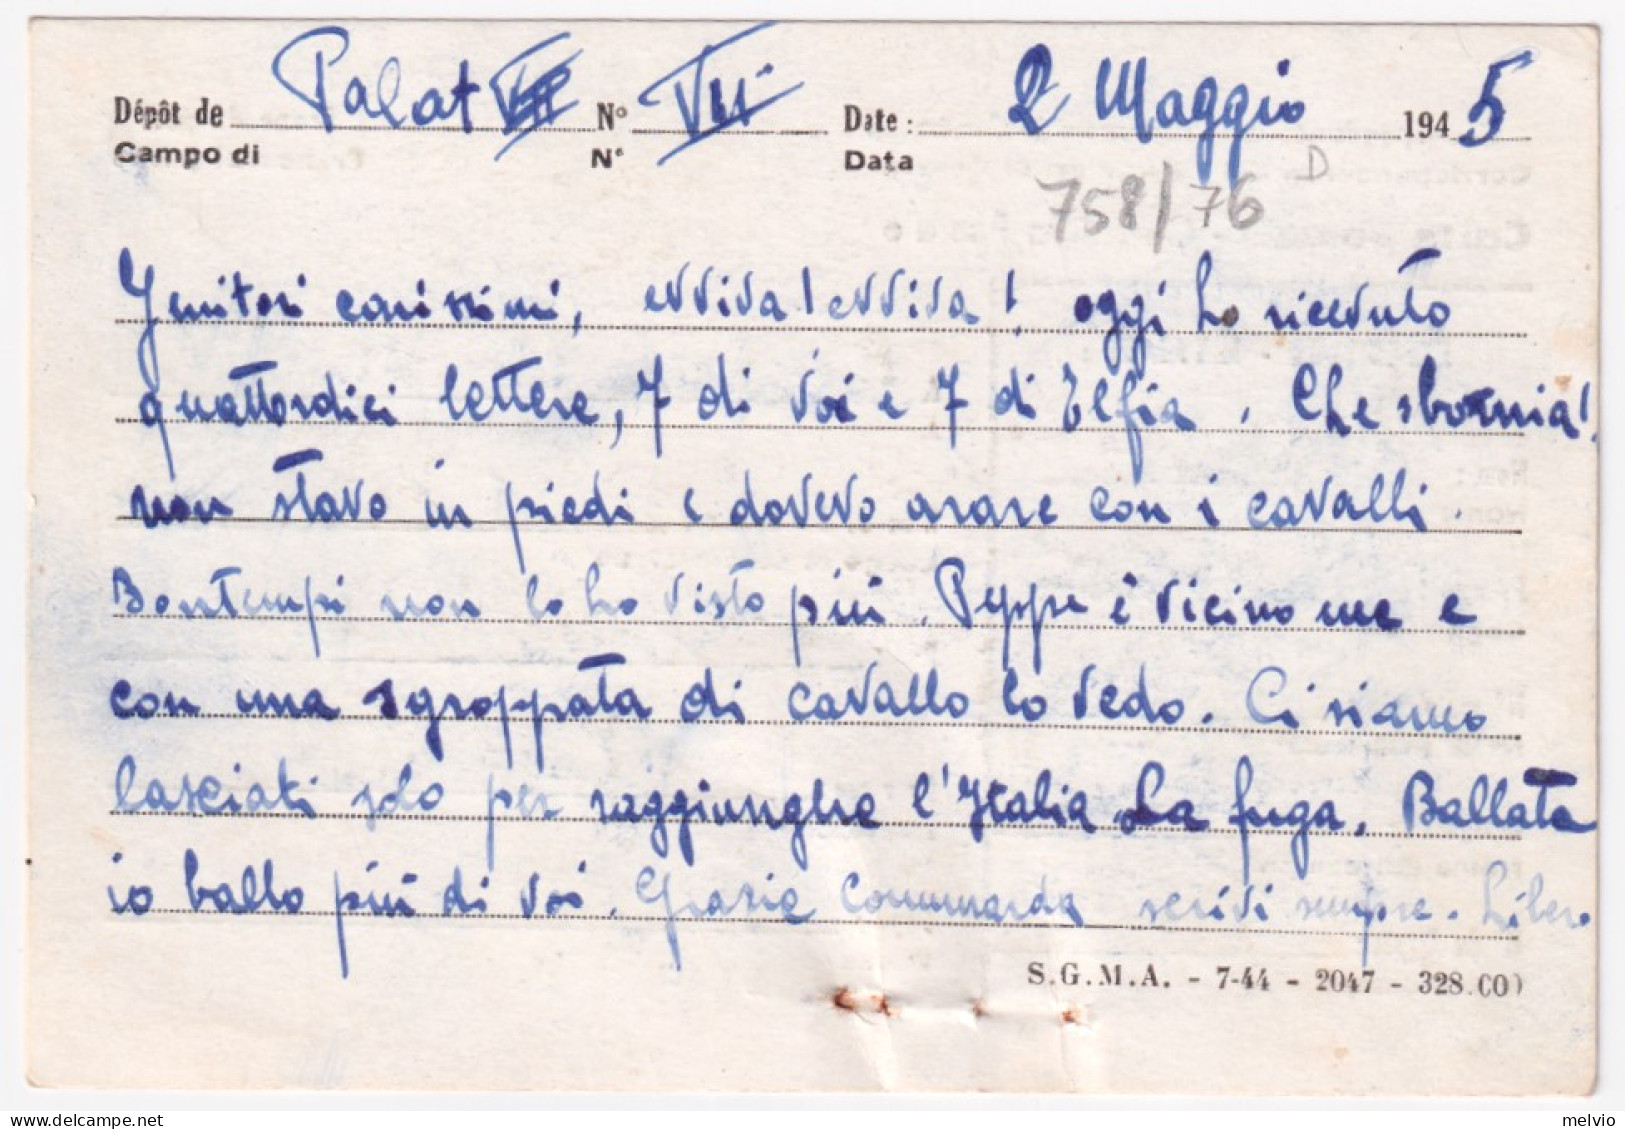 1945-DEPOT VII^Palat Manoscritto Su Cartolina Franchigia Da Prigioniero Guerra I - Poststempel